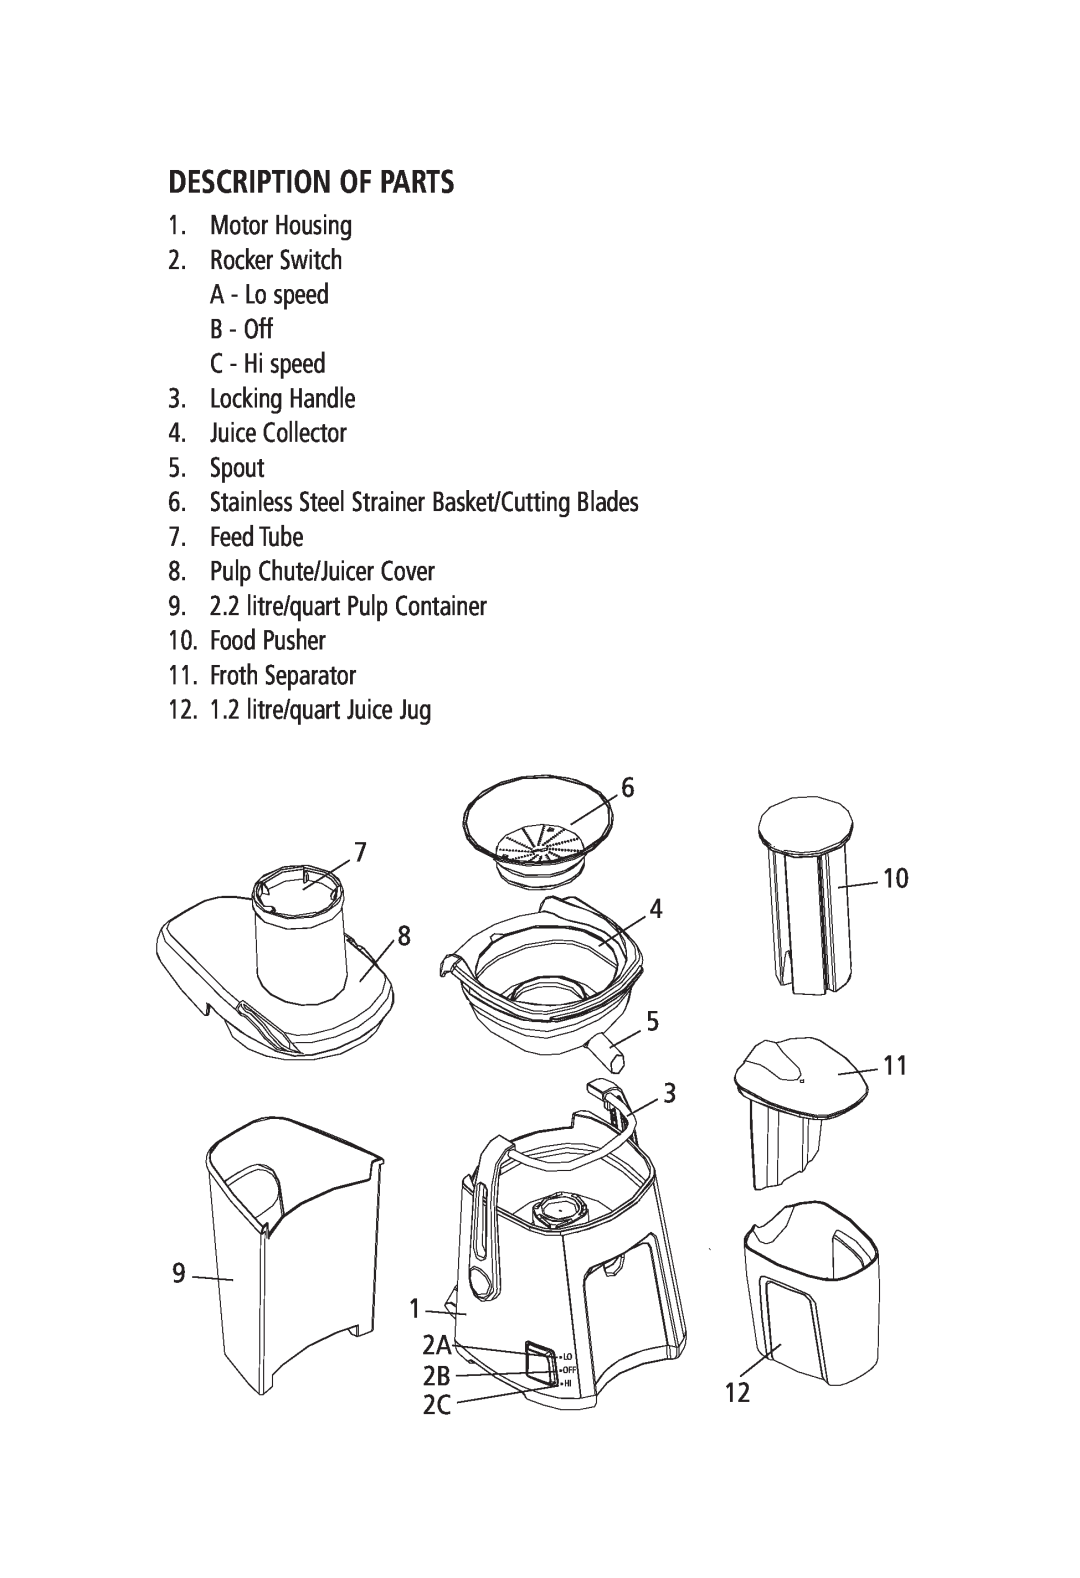 Salton JE-1187 manual Description Of Parts, Motor Housing, C - Hi speed 3. Locking Handle 4. Juice Collector 5. Spout 